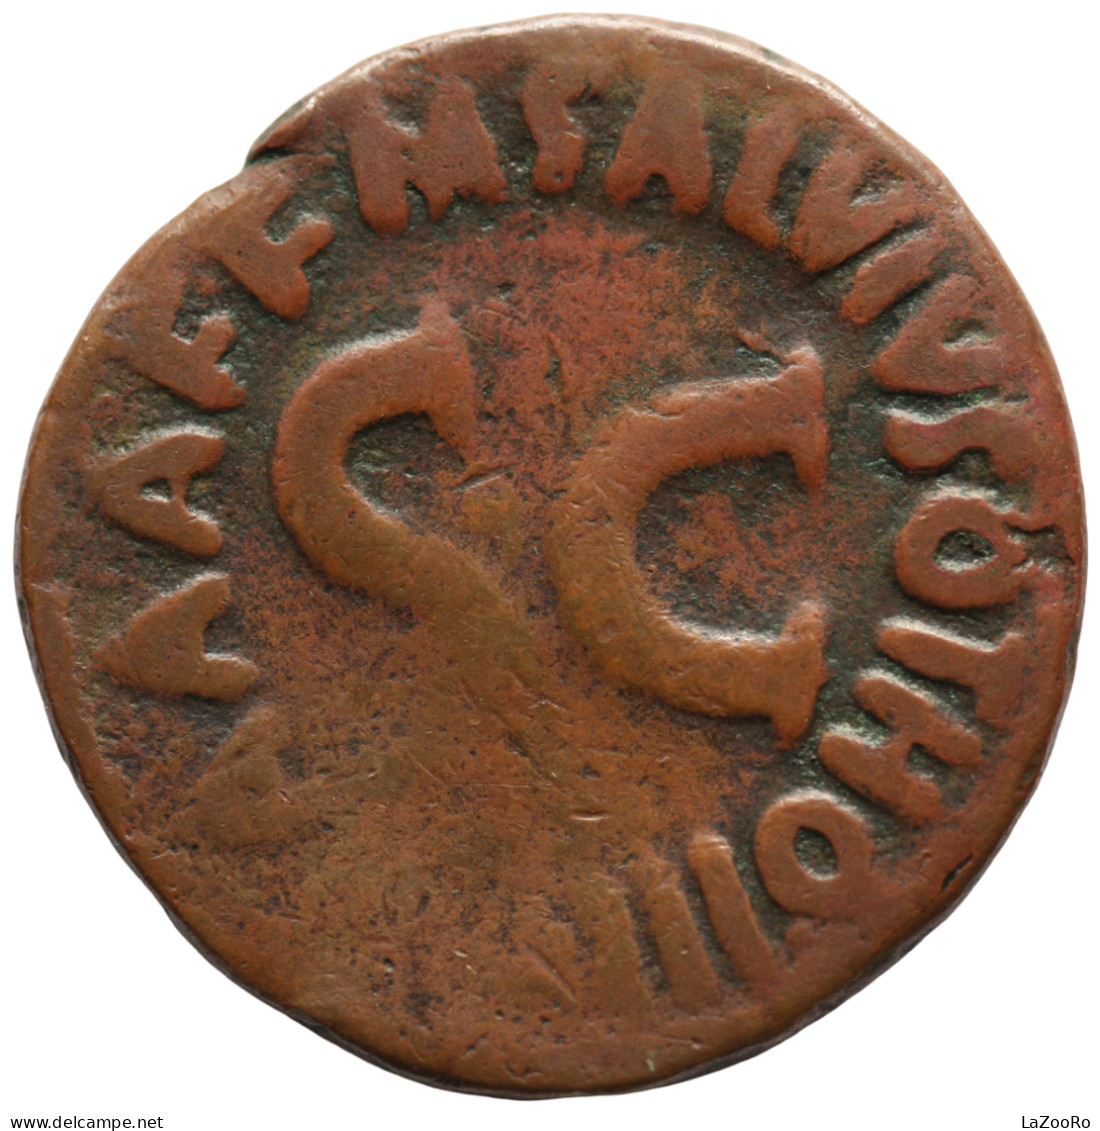 LaZooRo: Roman Empire - AE As Of Augustus (27 BC-AD 14), M. Salvius Otho, Moneyer - The Julio-Claudians (27 BC To 69 AD)